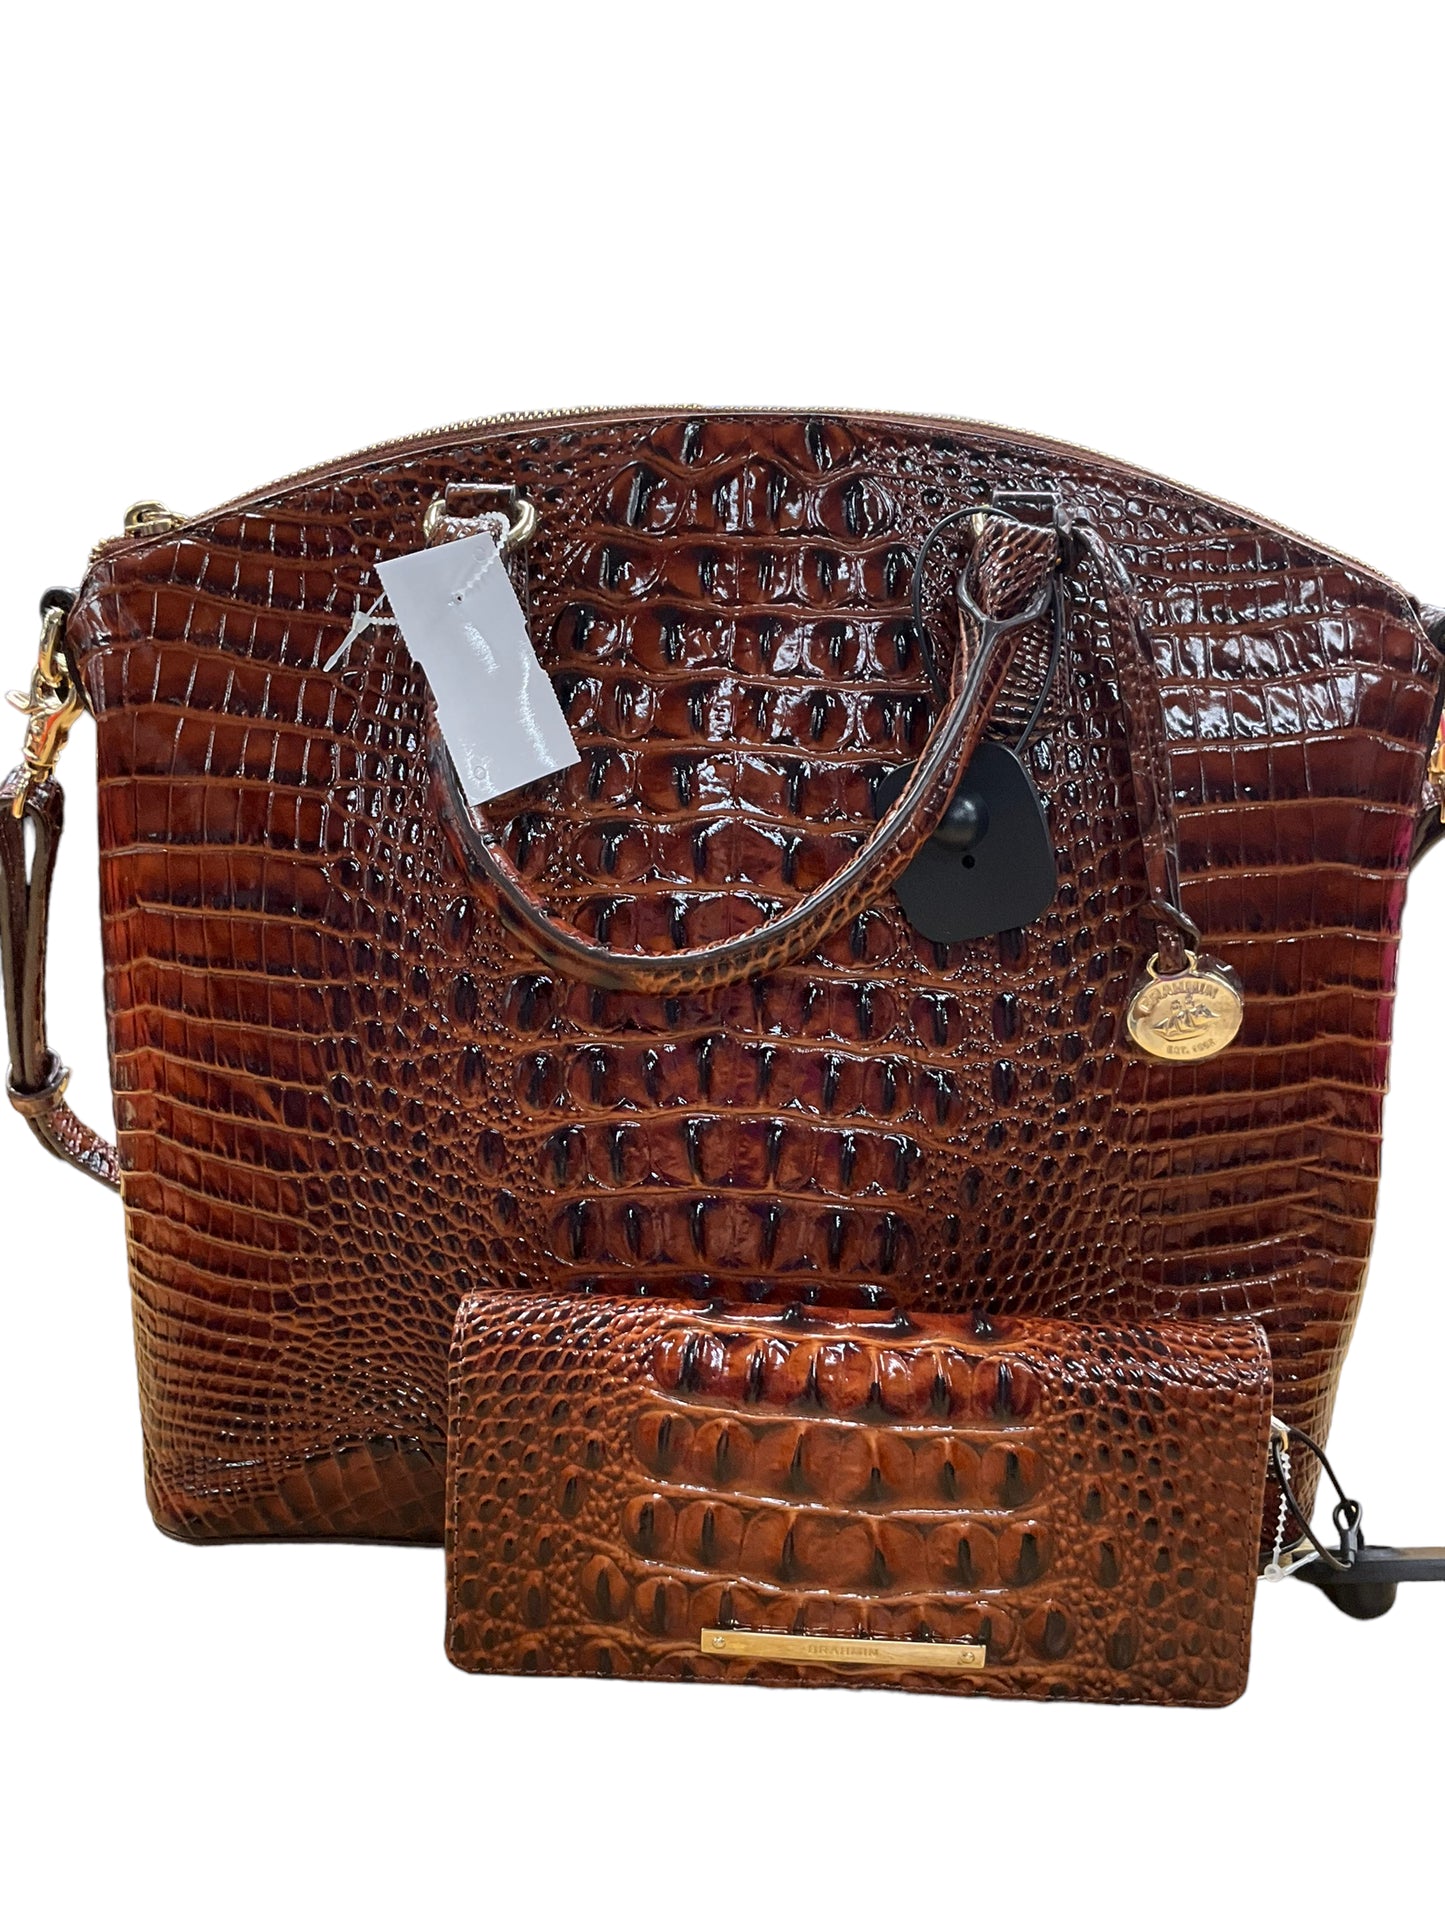 Final sale New Brahmin Large Duxbury Satchel pecan Melbourne bag  Vintage  leather handbag, Leather handbags crossbody, Brown leather bag